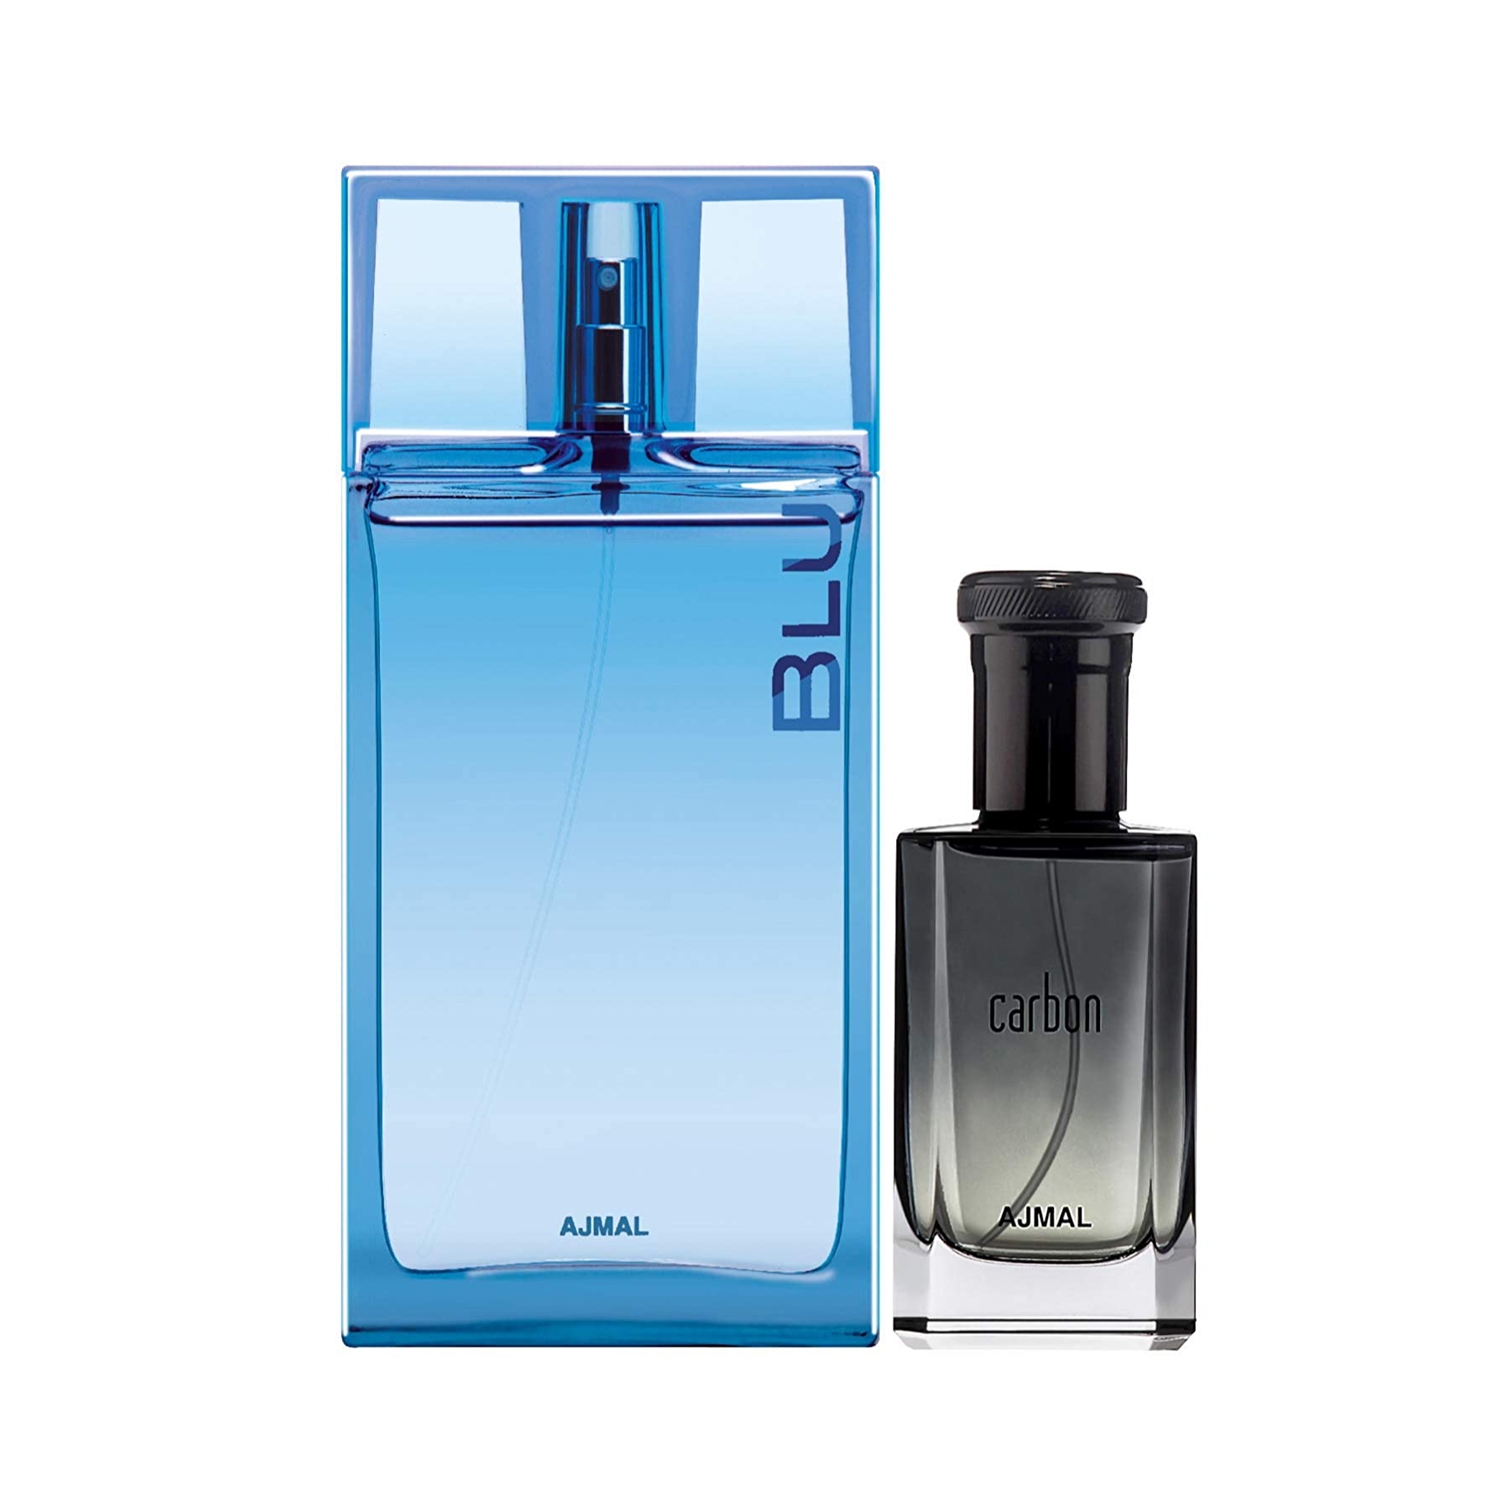 Ajmal | Ajmal Blu Eau De Parfum Aquatic Woody Perfume And Carbon Eau De Parfum Citrus Spicy Perfume - (2Pcs)